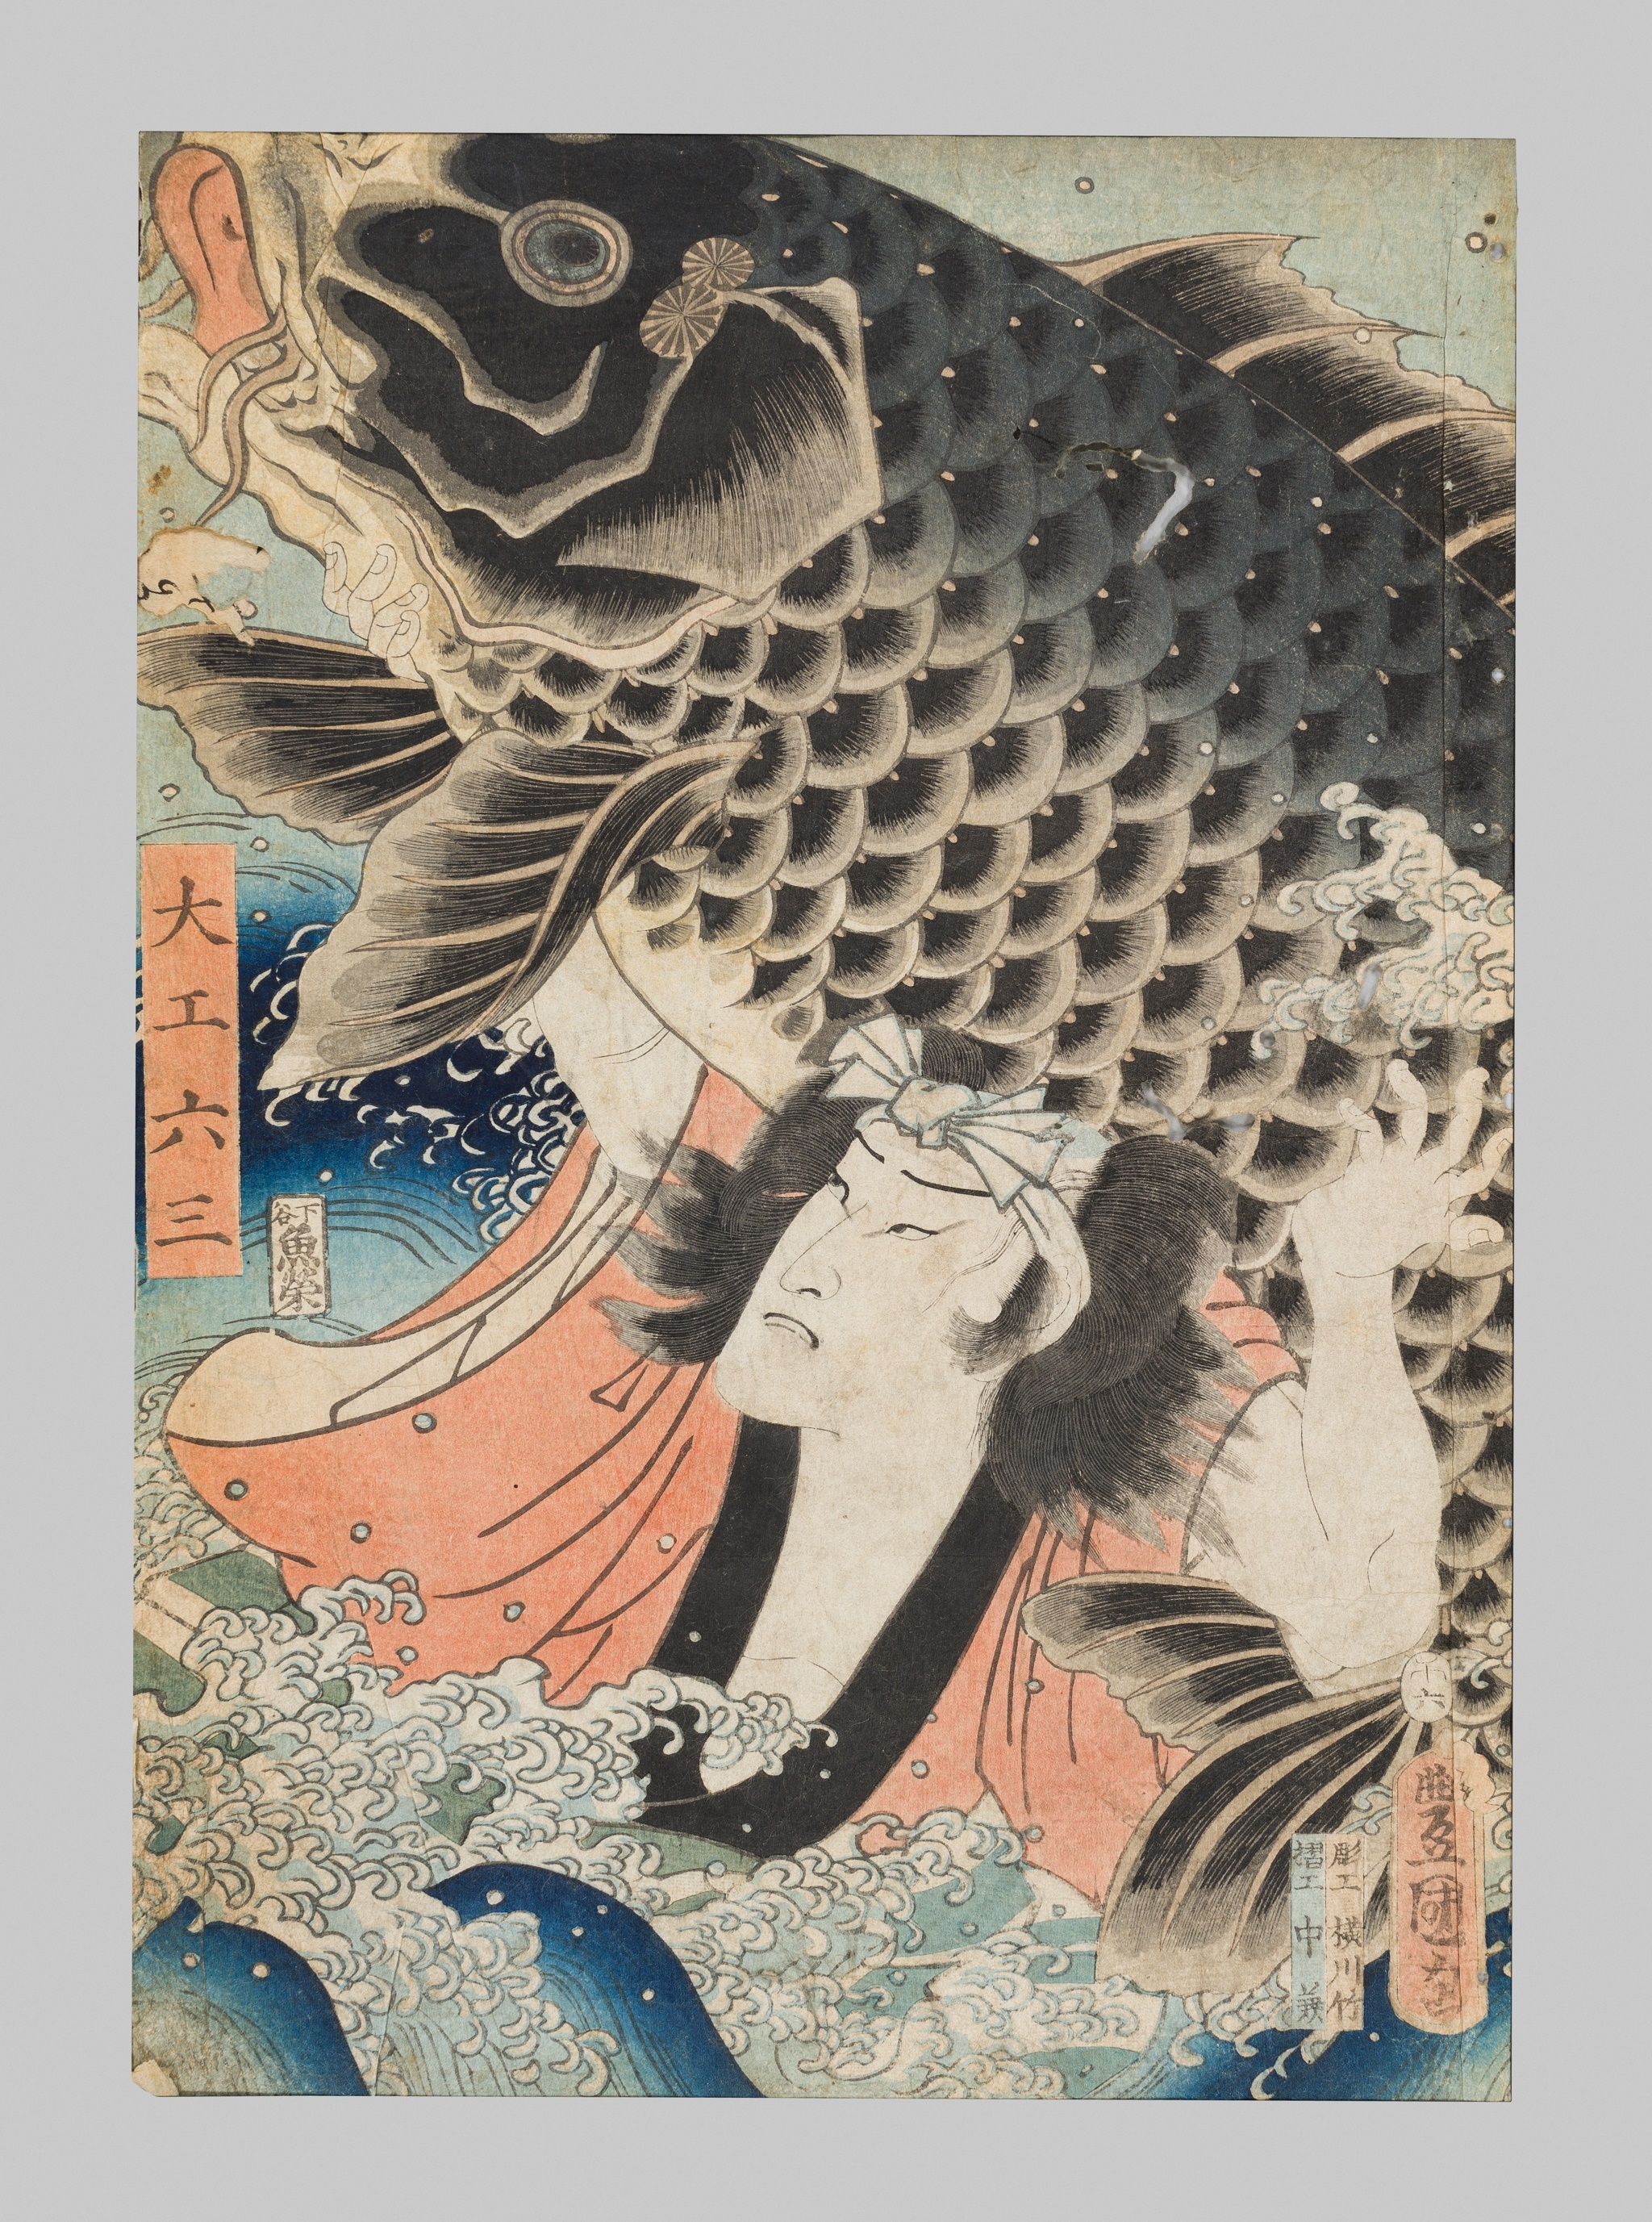 Artwork by Utagawa Kunisada, UTAGAWA KUNISADA I: ROKUSABURO THE CARPENTER, Made of Color woodblock print on paper